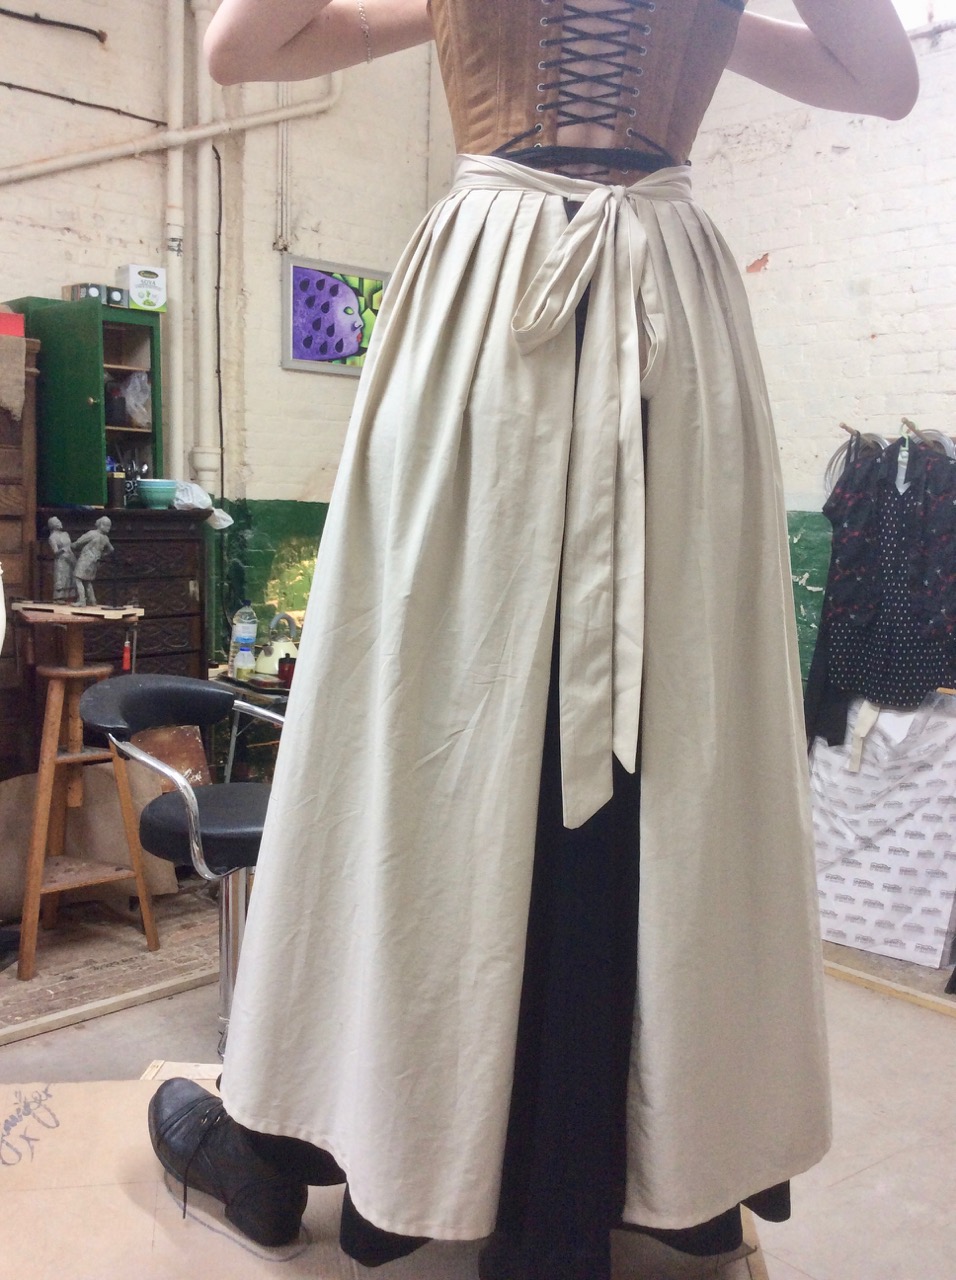 The wraparound apron and the skirt beneath